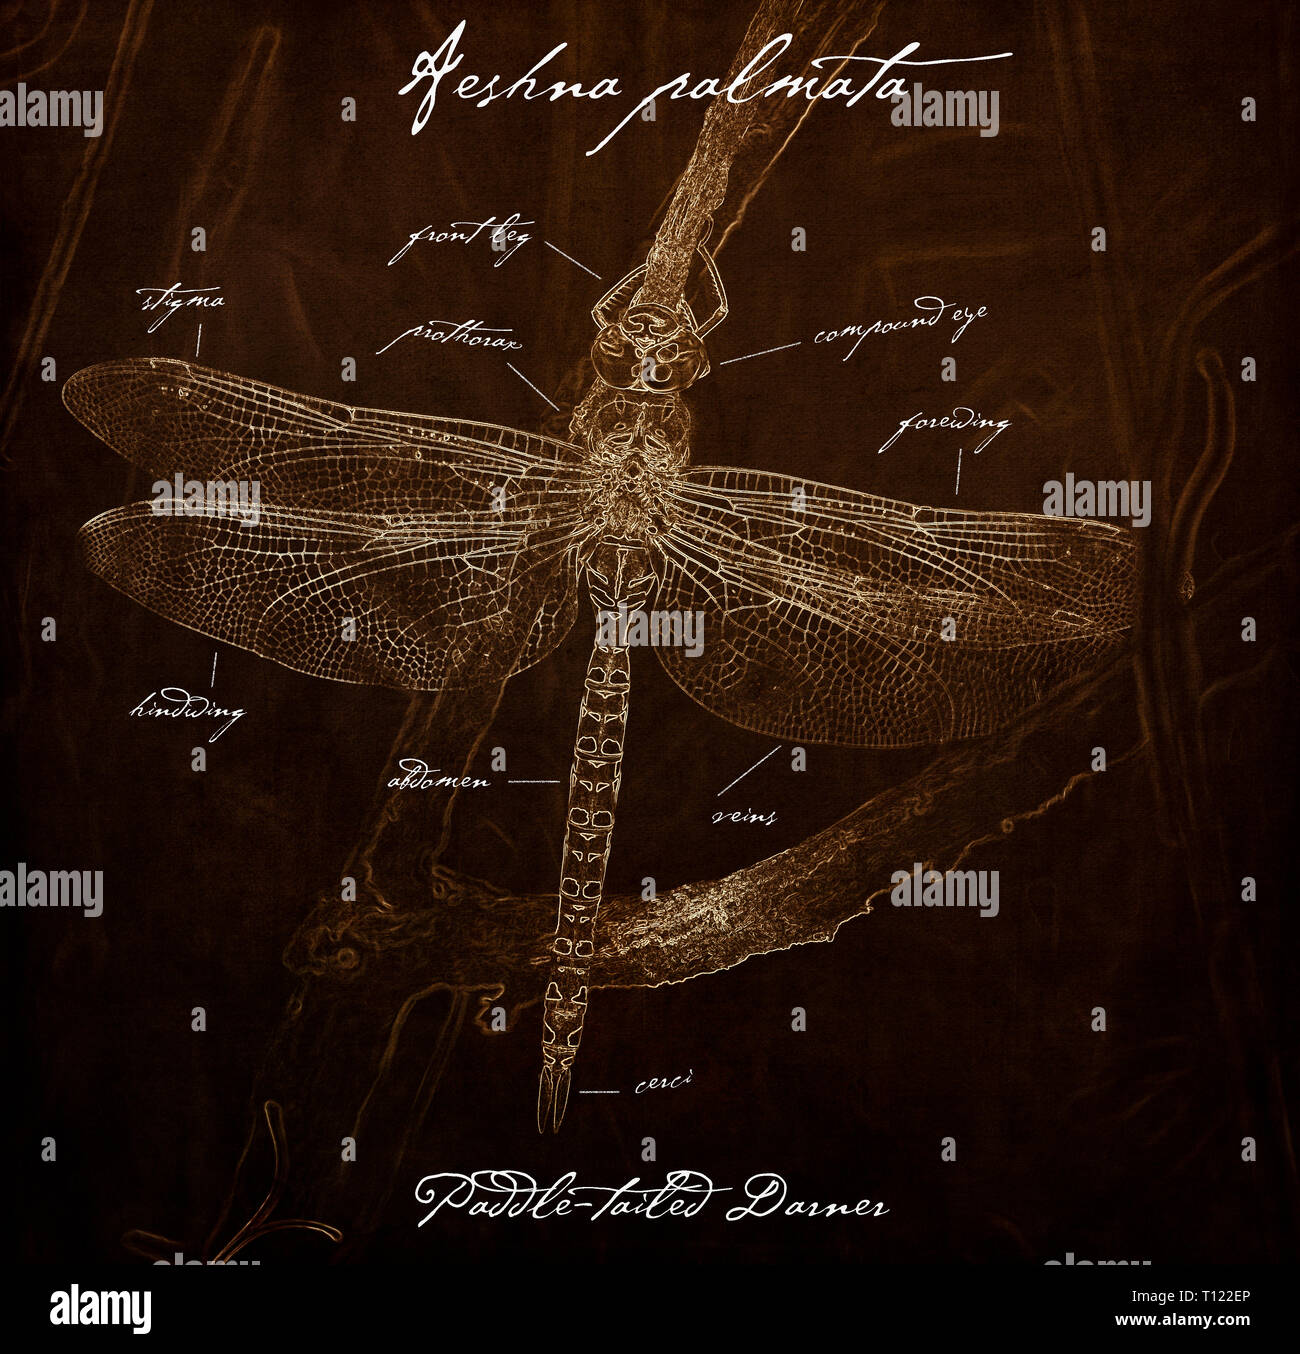 Paddle-tailed Darner (Aeshna palmata) Old Fashioned Anatomy Illustration in Sepia Stock Photo